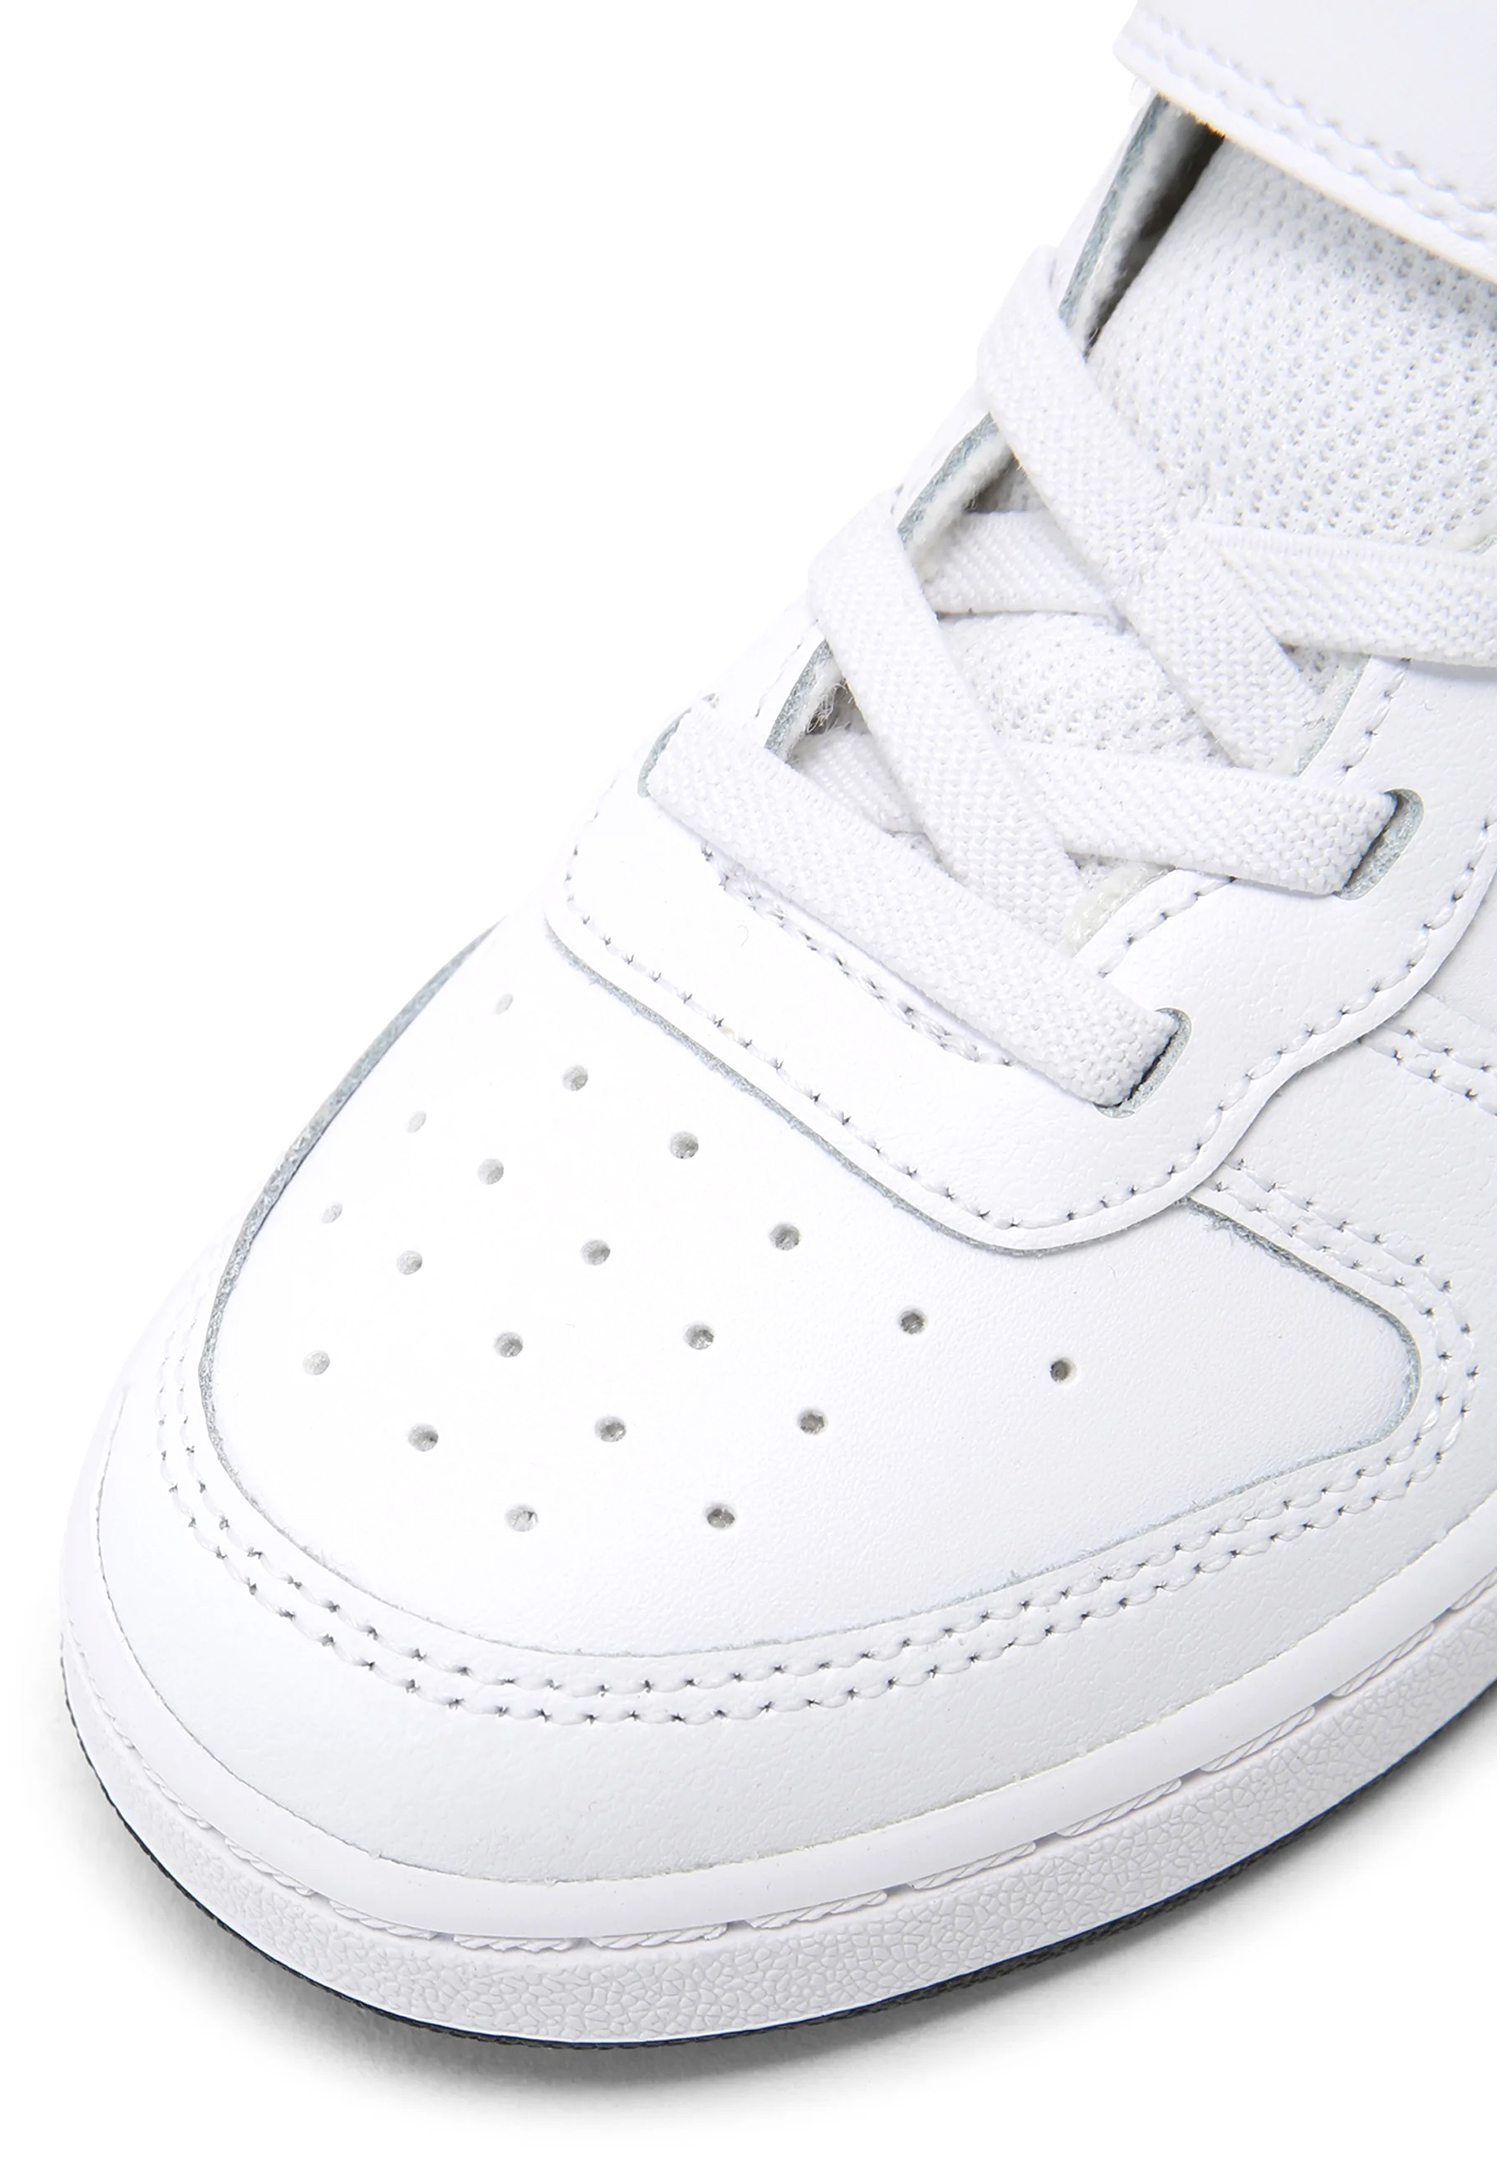 NIKE Court Borough Low Kinder Baby Sneaker Tennis Schuhe weiss BQ5453